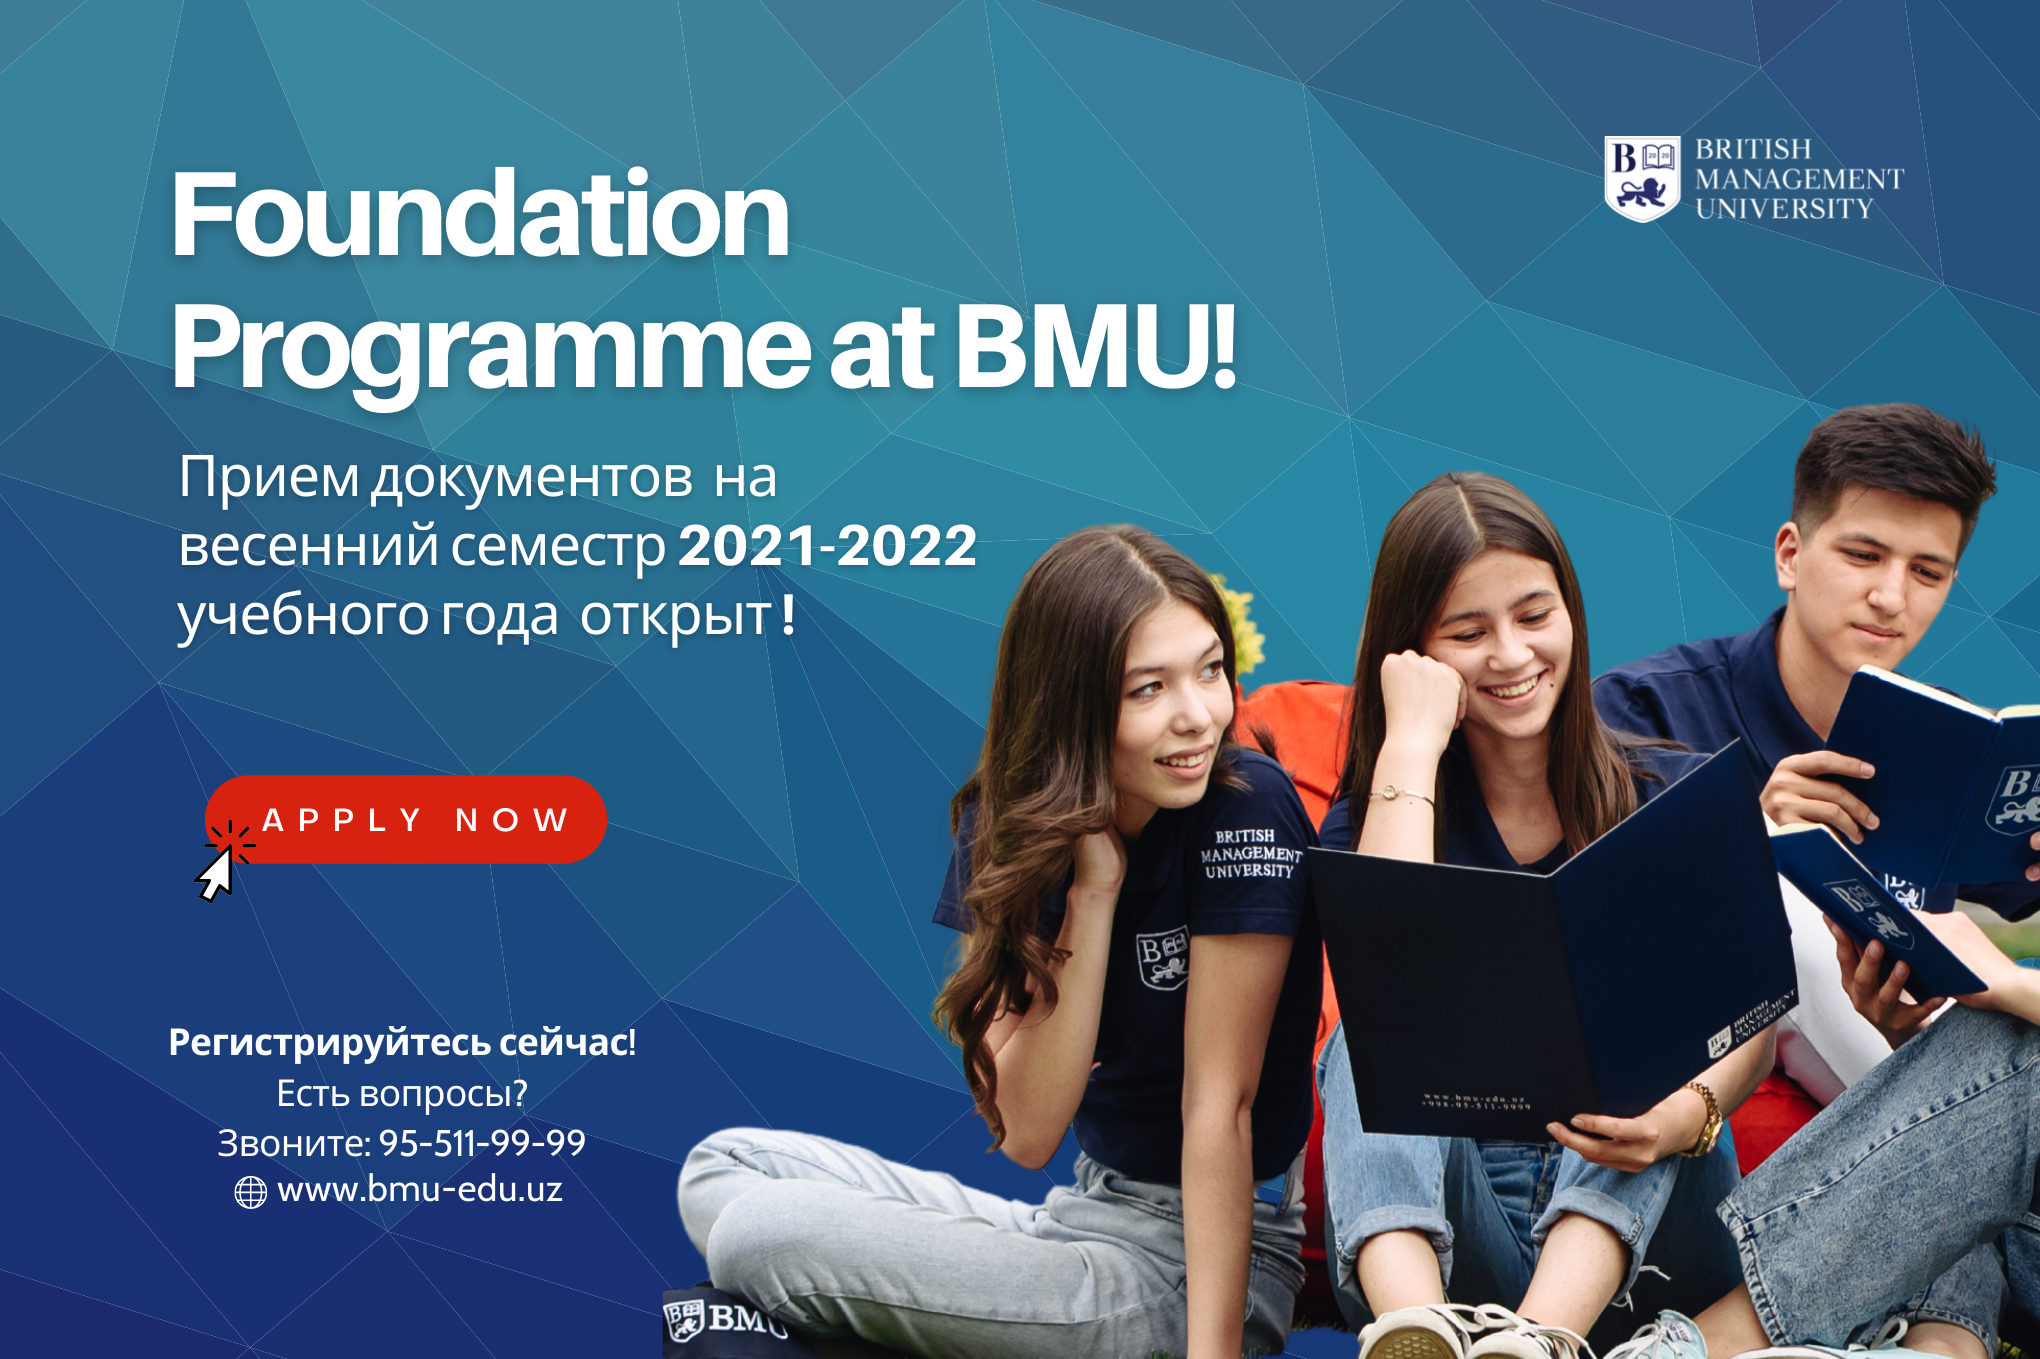 Foundation programme. British University in Tashkent. British Management University. British Management Uni in Tashkent.